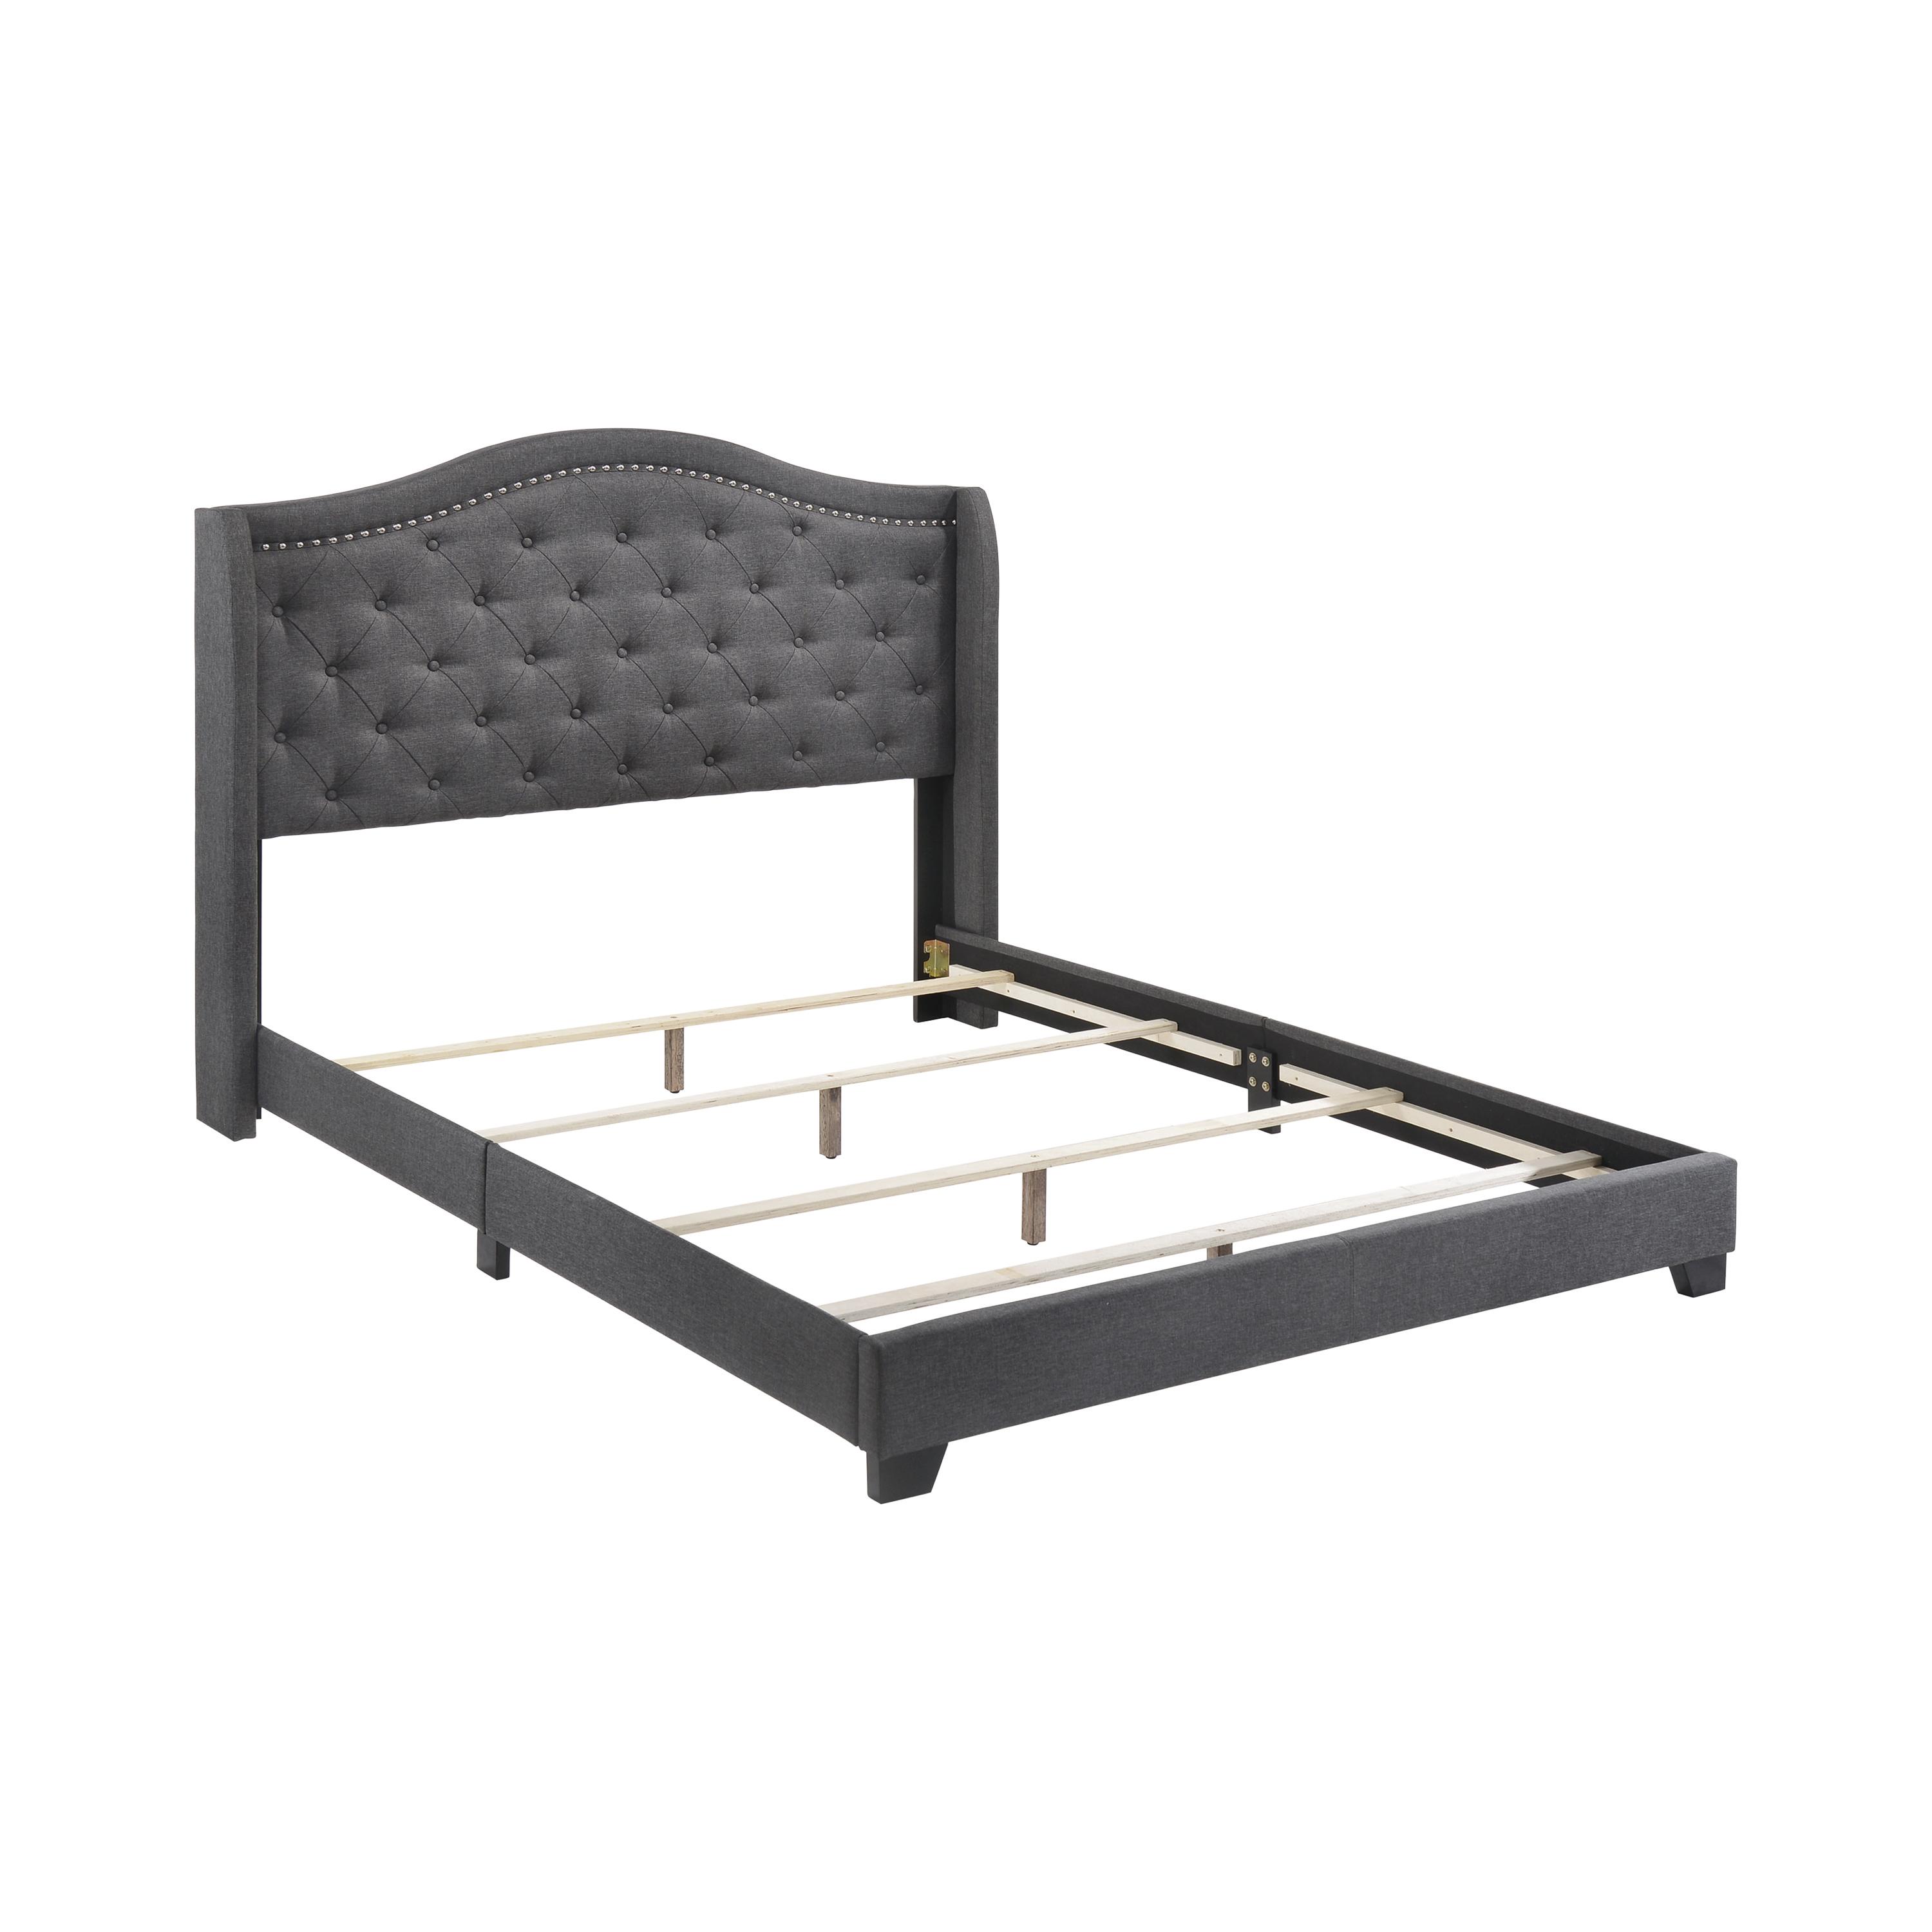 

    
Contemporary Gray Fabric Queen Bed Coaster 310072Q Sonoma
